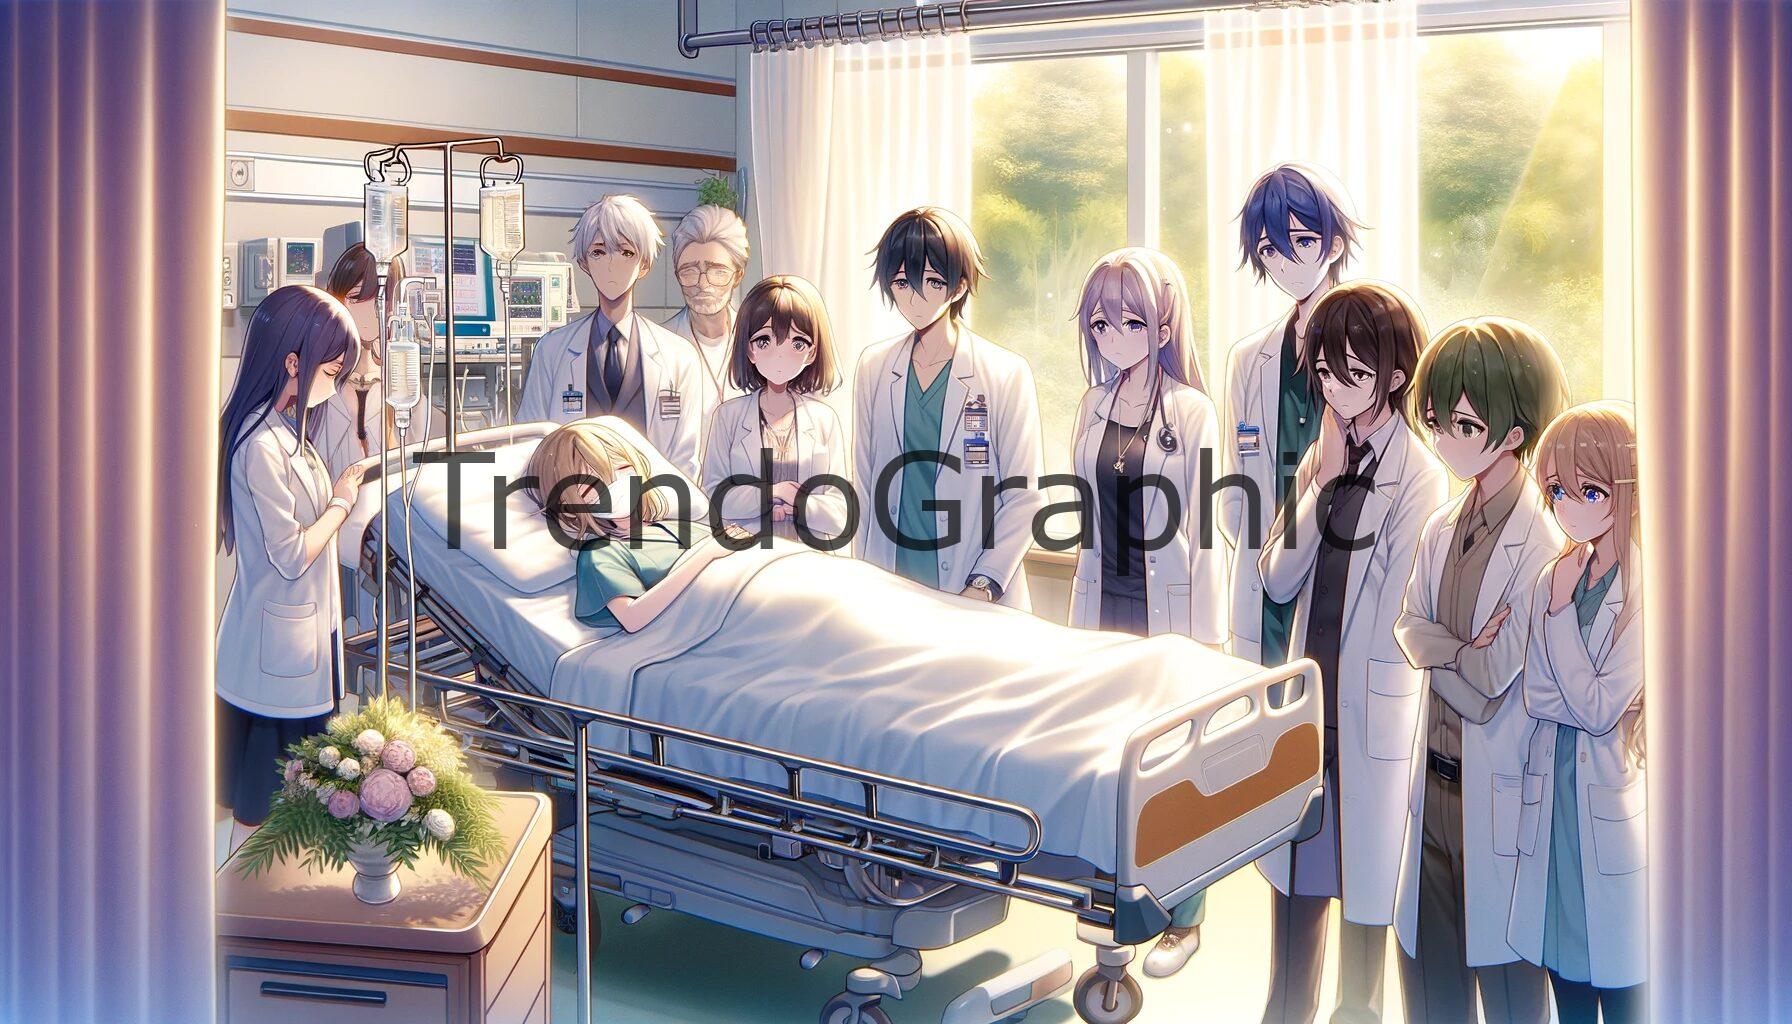 Heart-Wrenching Anime Hospital Goodbyes: A Scene of Hope and Sorrow